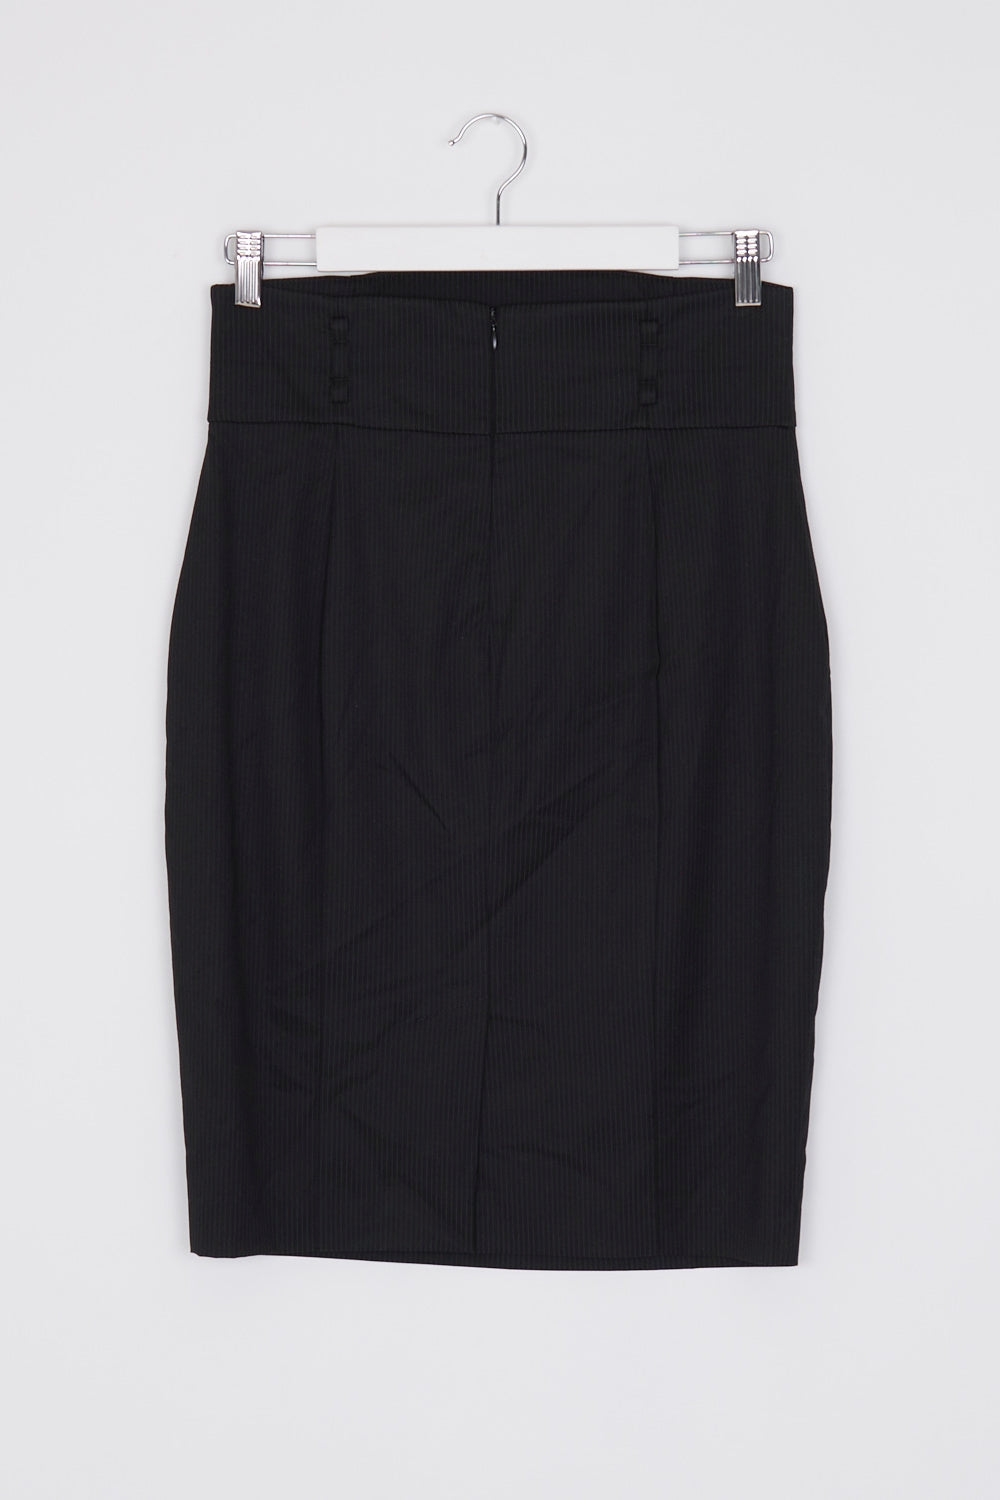 Cue Black Striped Midi Skirt 10